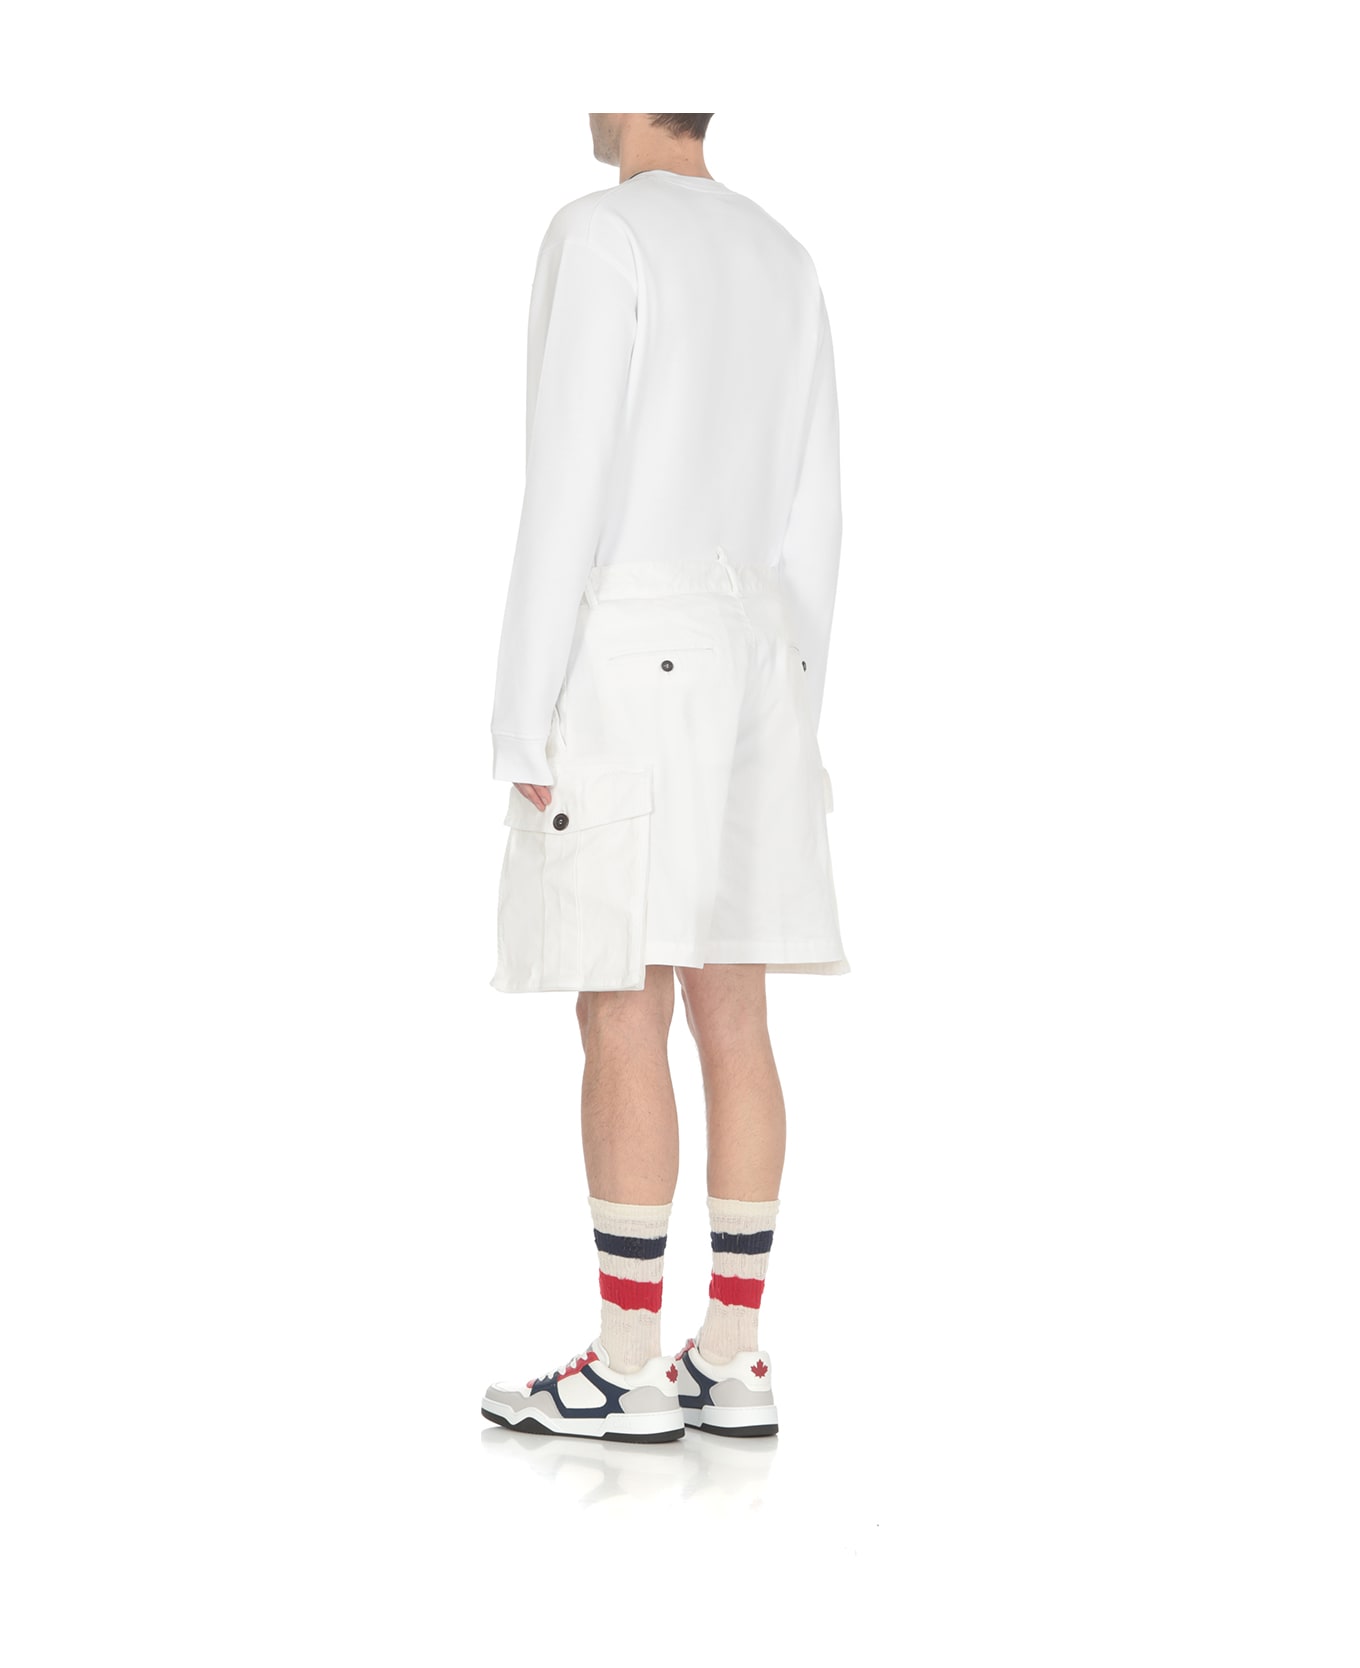 Dsquared2 Cotton Cargo Shorts - White ショートパンツ